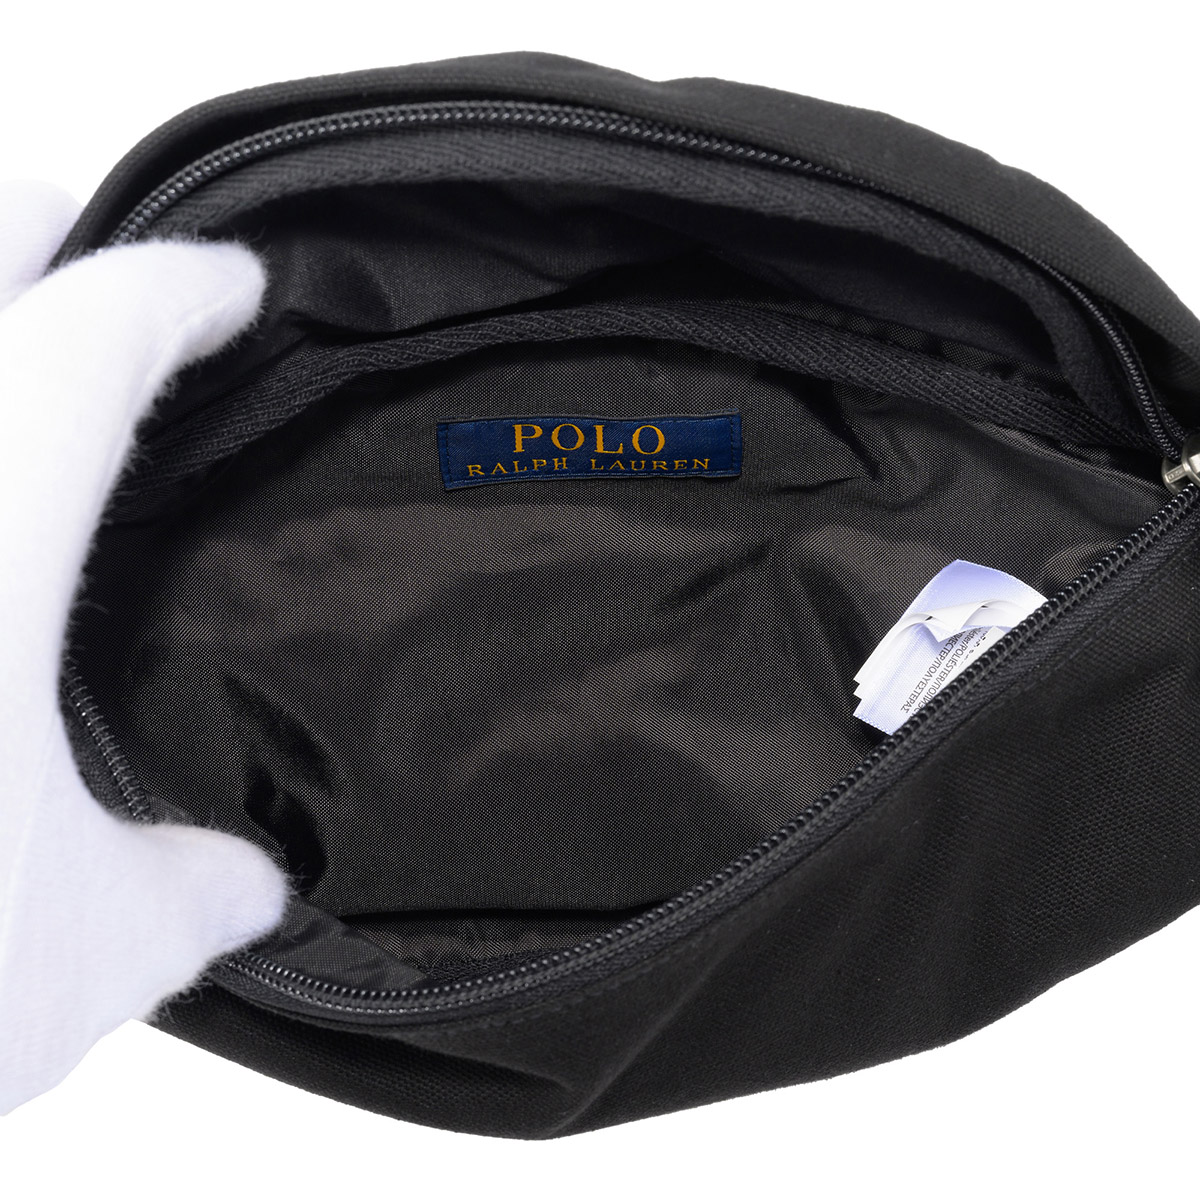  Polo Ralph Lauren сумка-пояс сумка "body" POLO RALPH LAUREN парусина талия упаковка 405842687 001